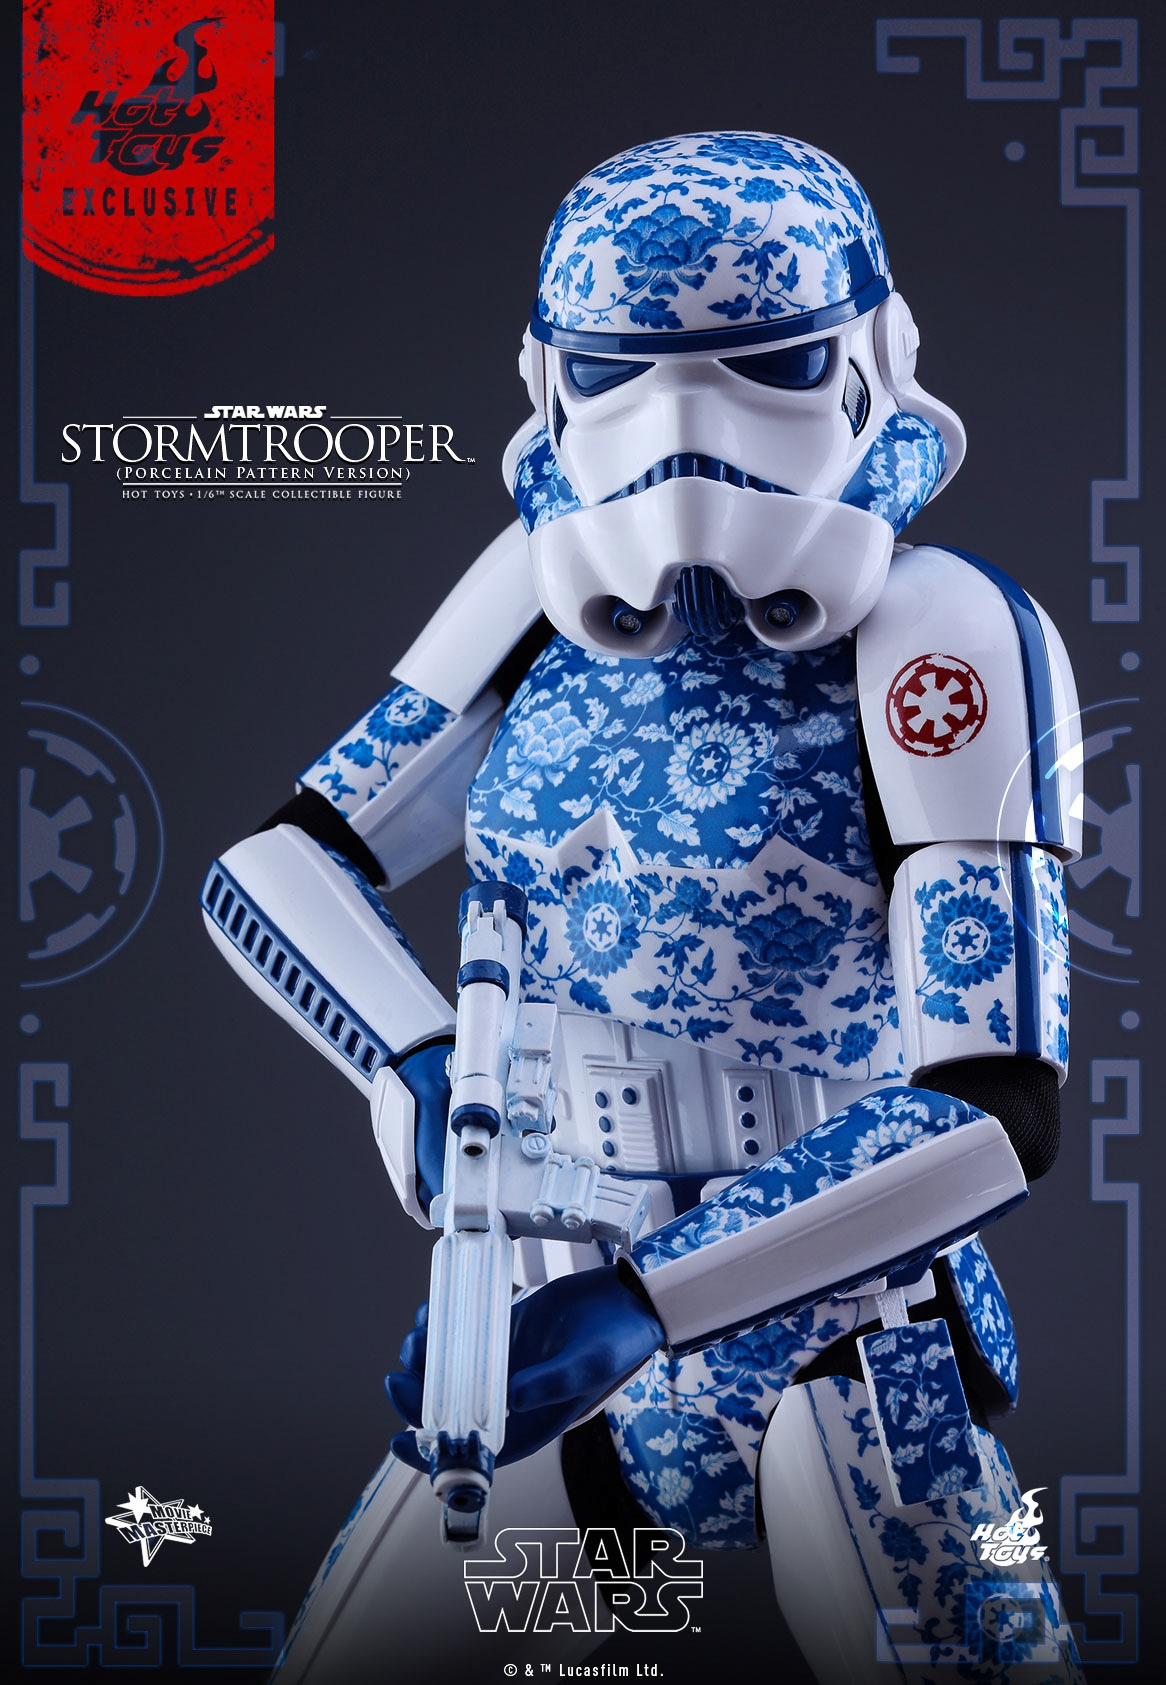 Hot-Toys-MMS401-Stormtrooper-Porcelain-Pattern-015.jpg